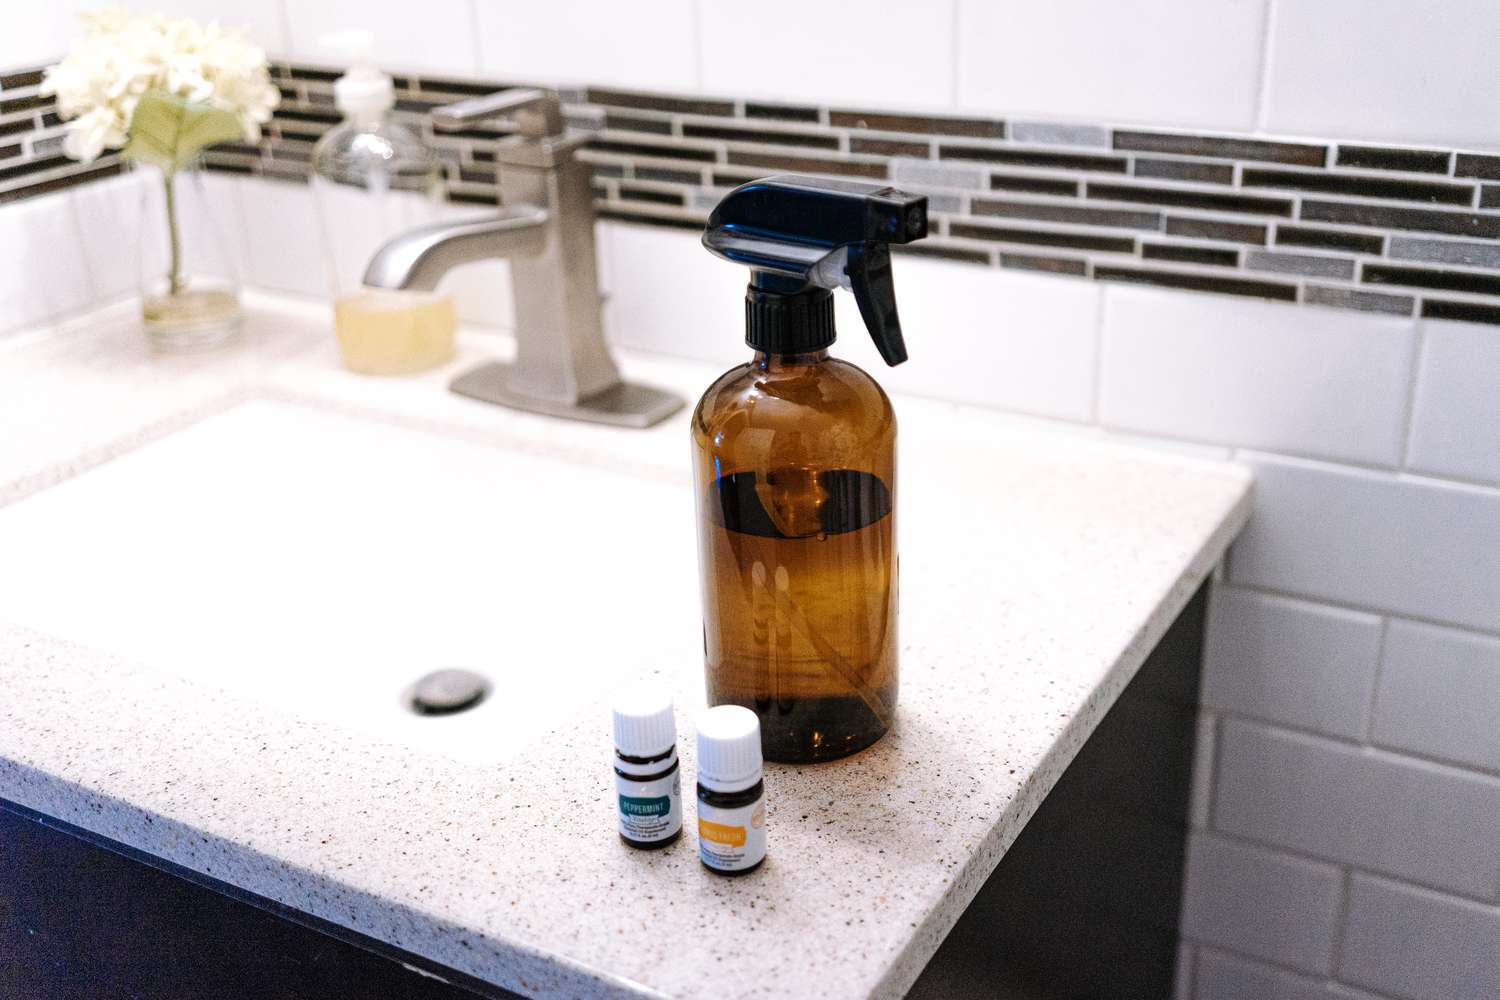 castile soap spray in the bathroom